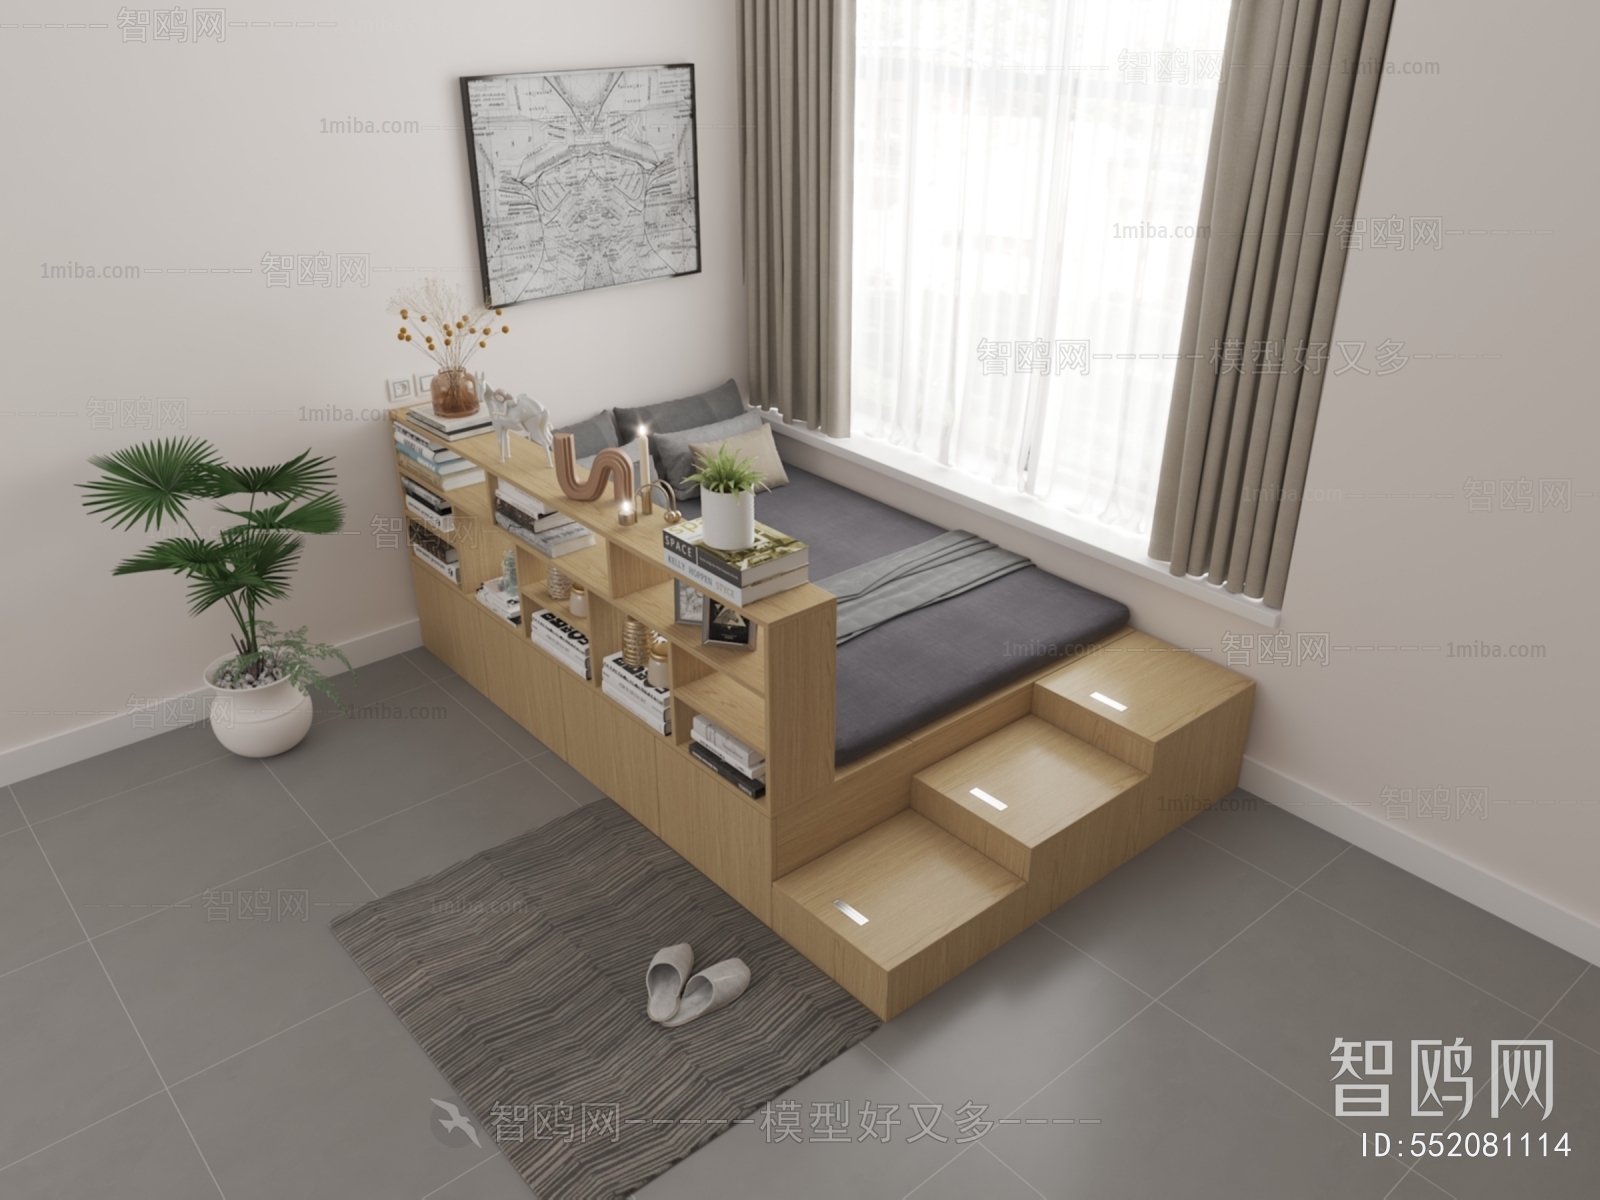 Modern Tatami Bed